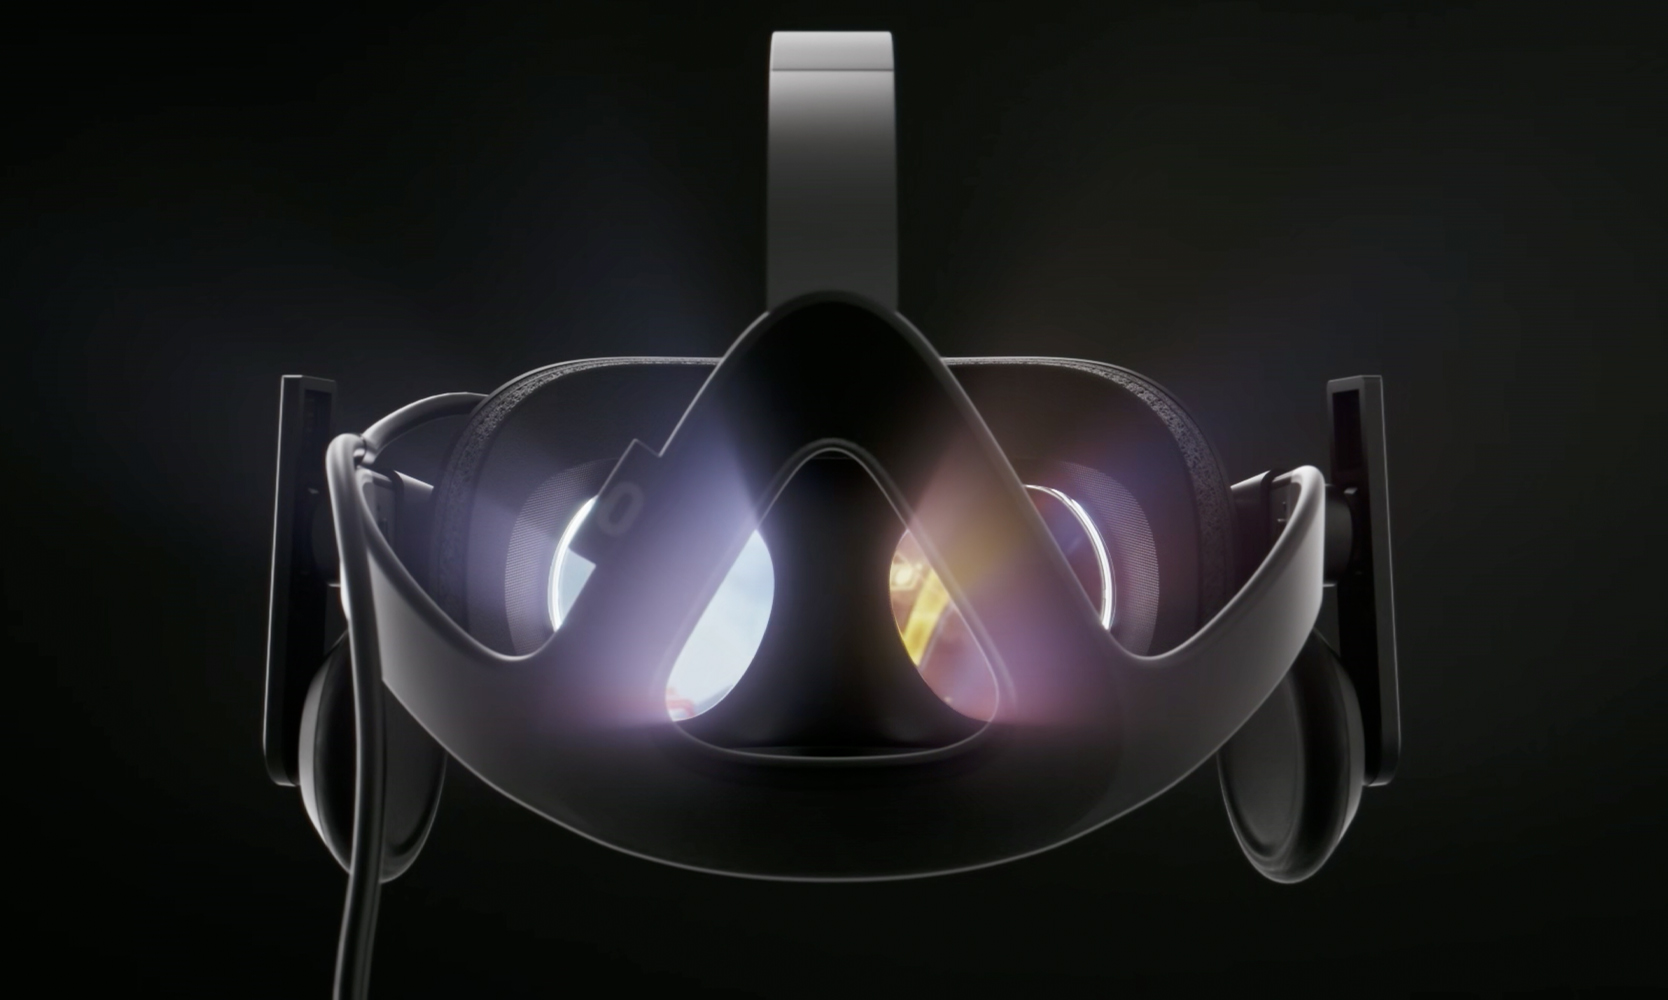 Oculus Rift “E3 Reveal”